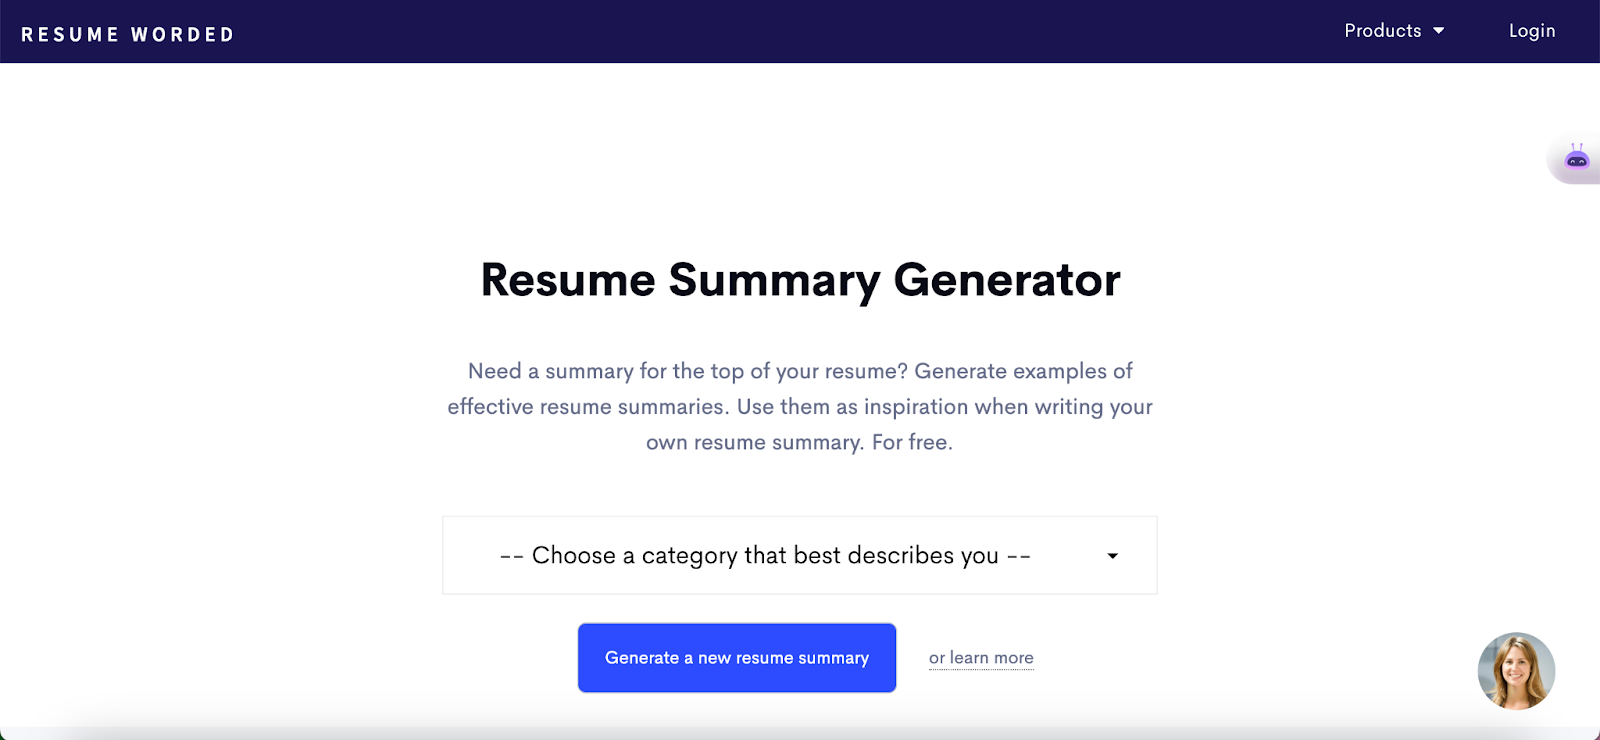 Resume summary generators - Resume Worded